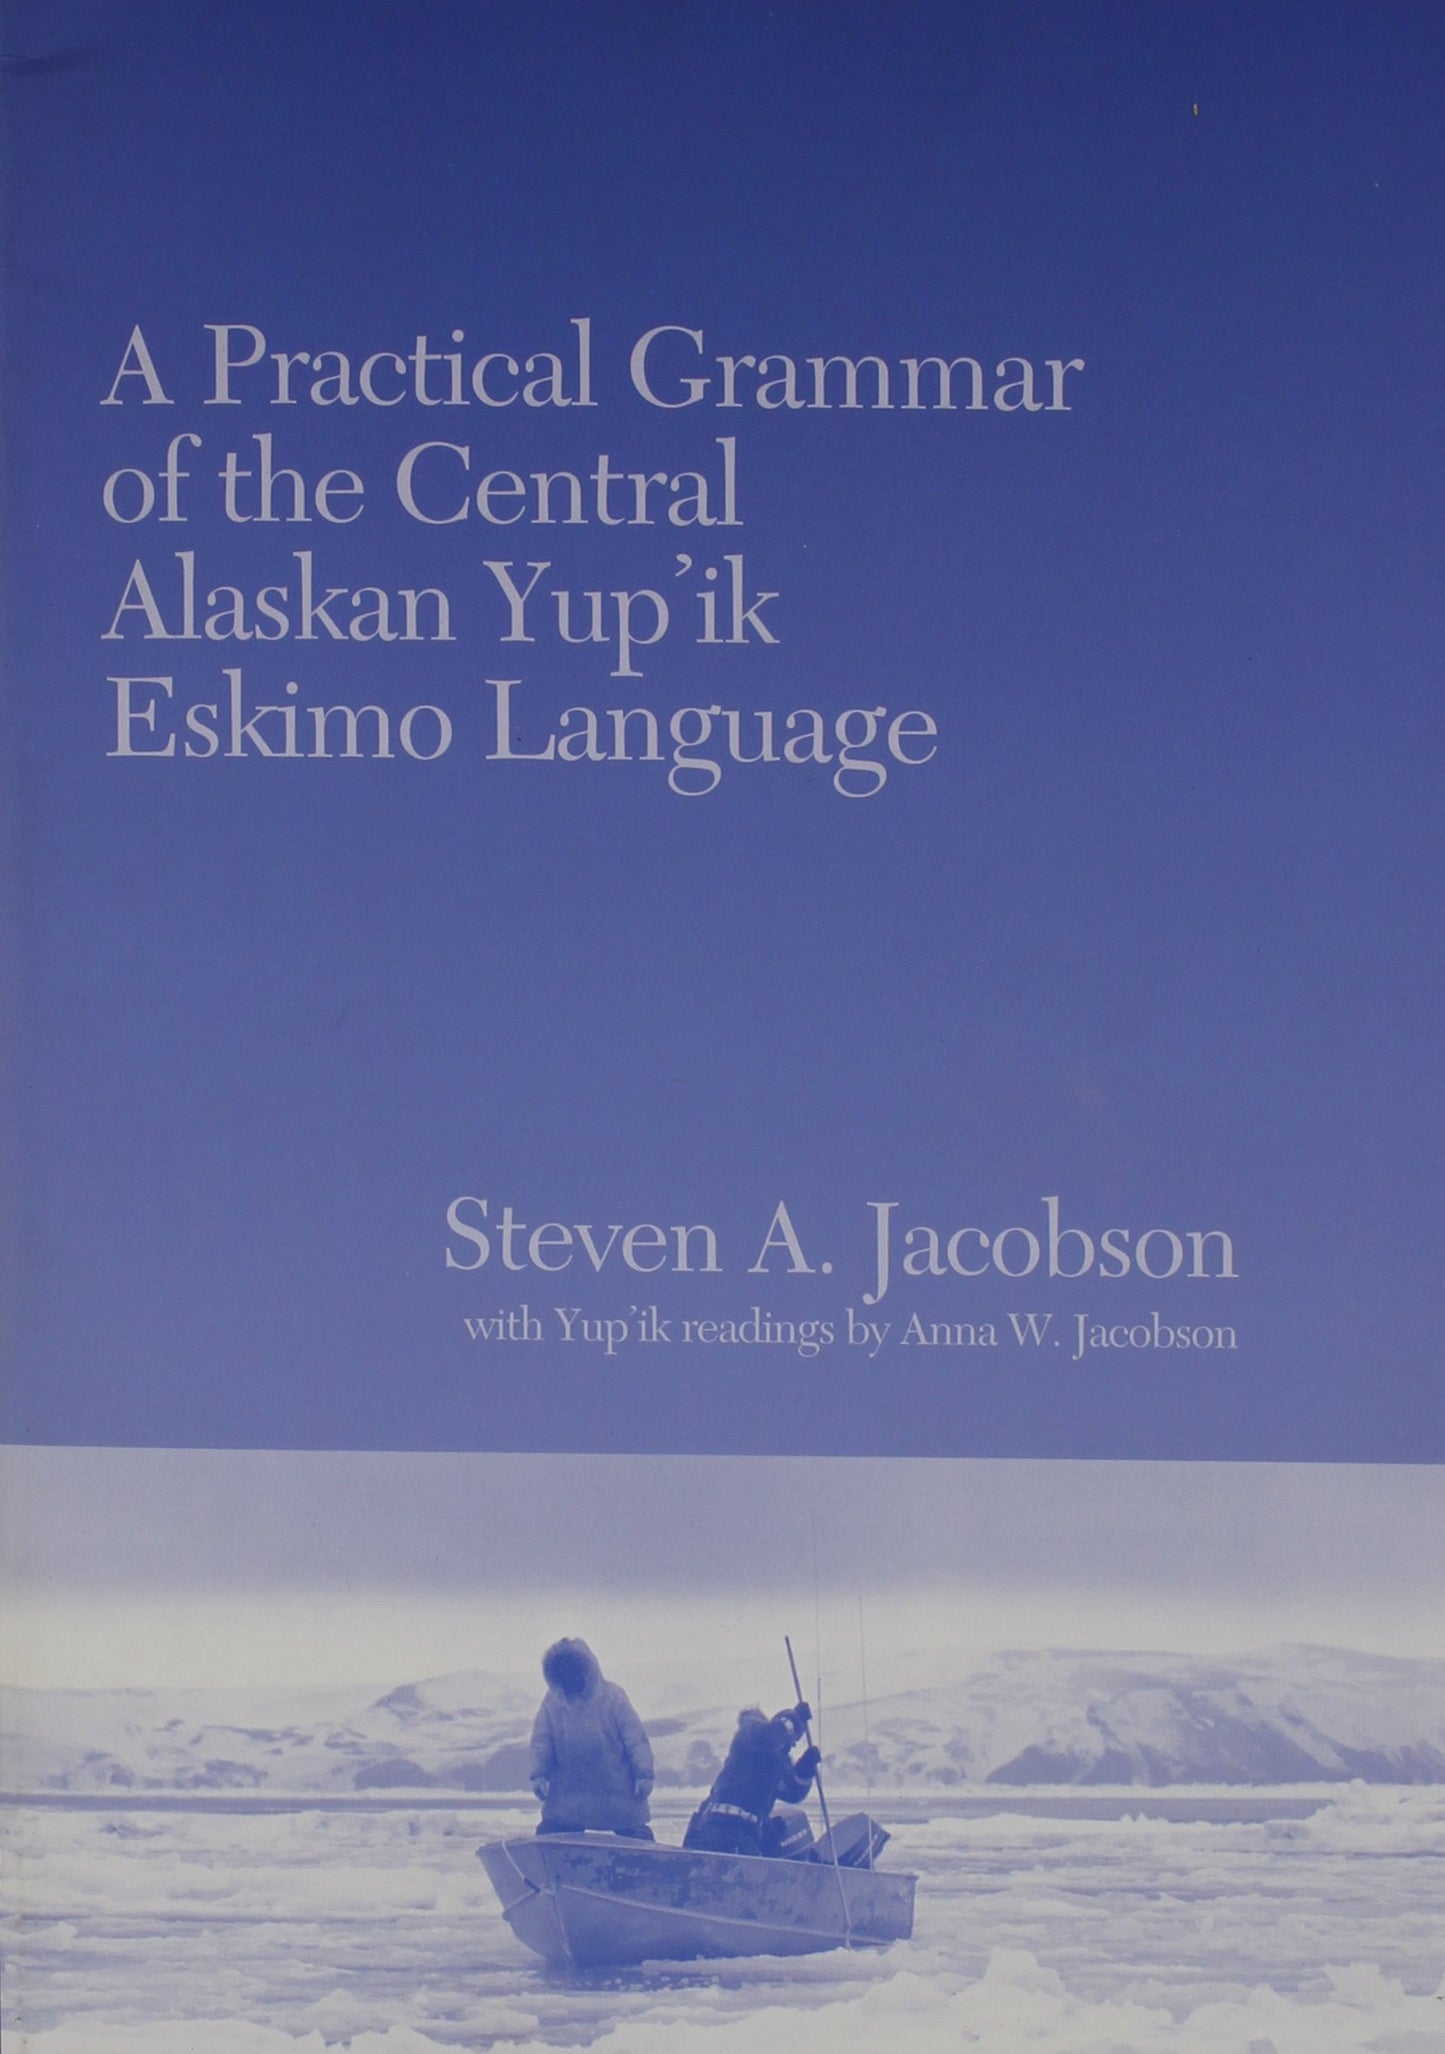 Practical Grammar of the Central Alaskan Yup'ik